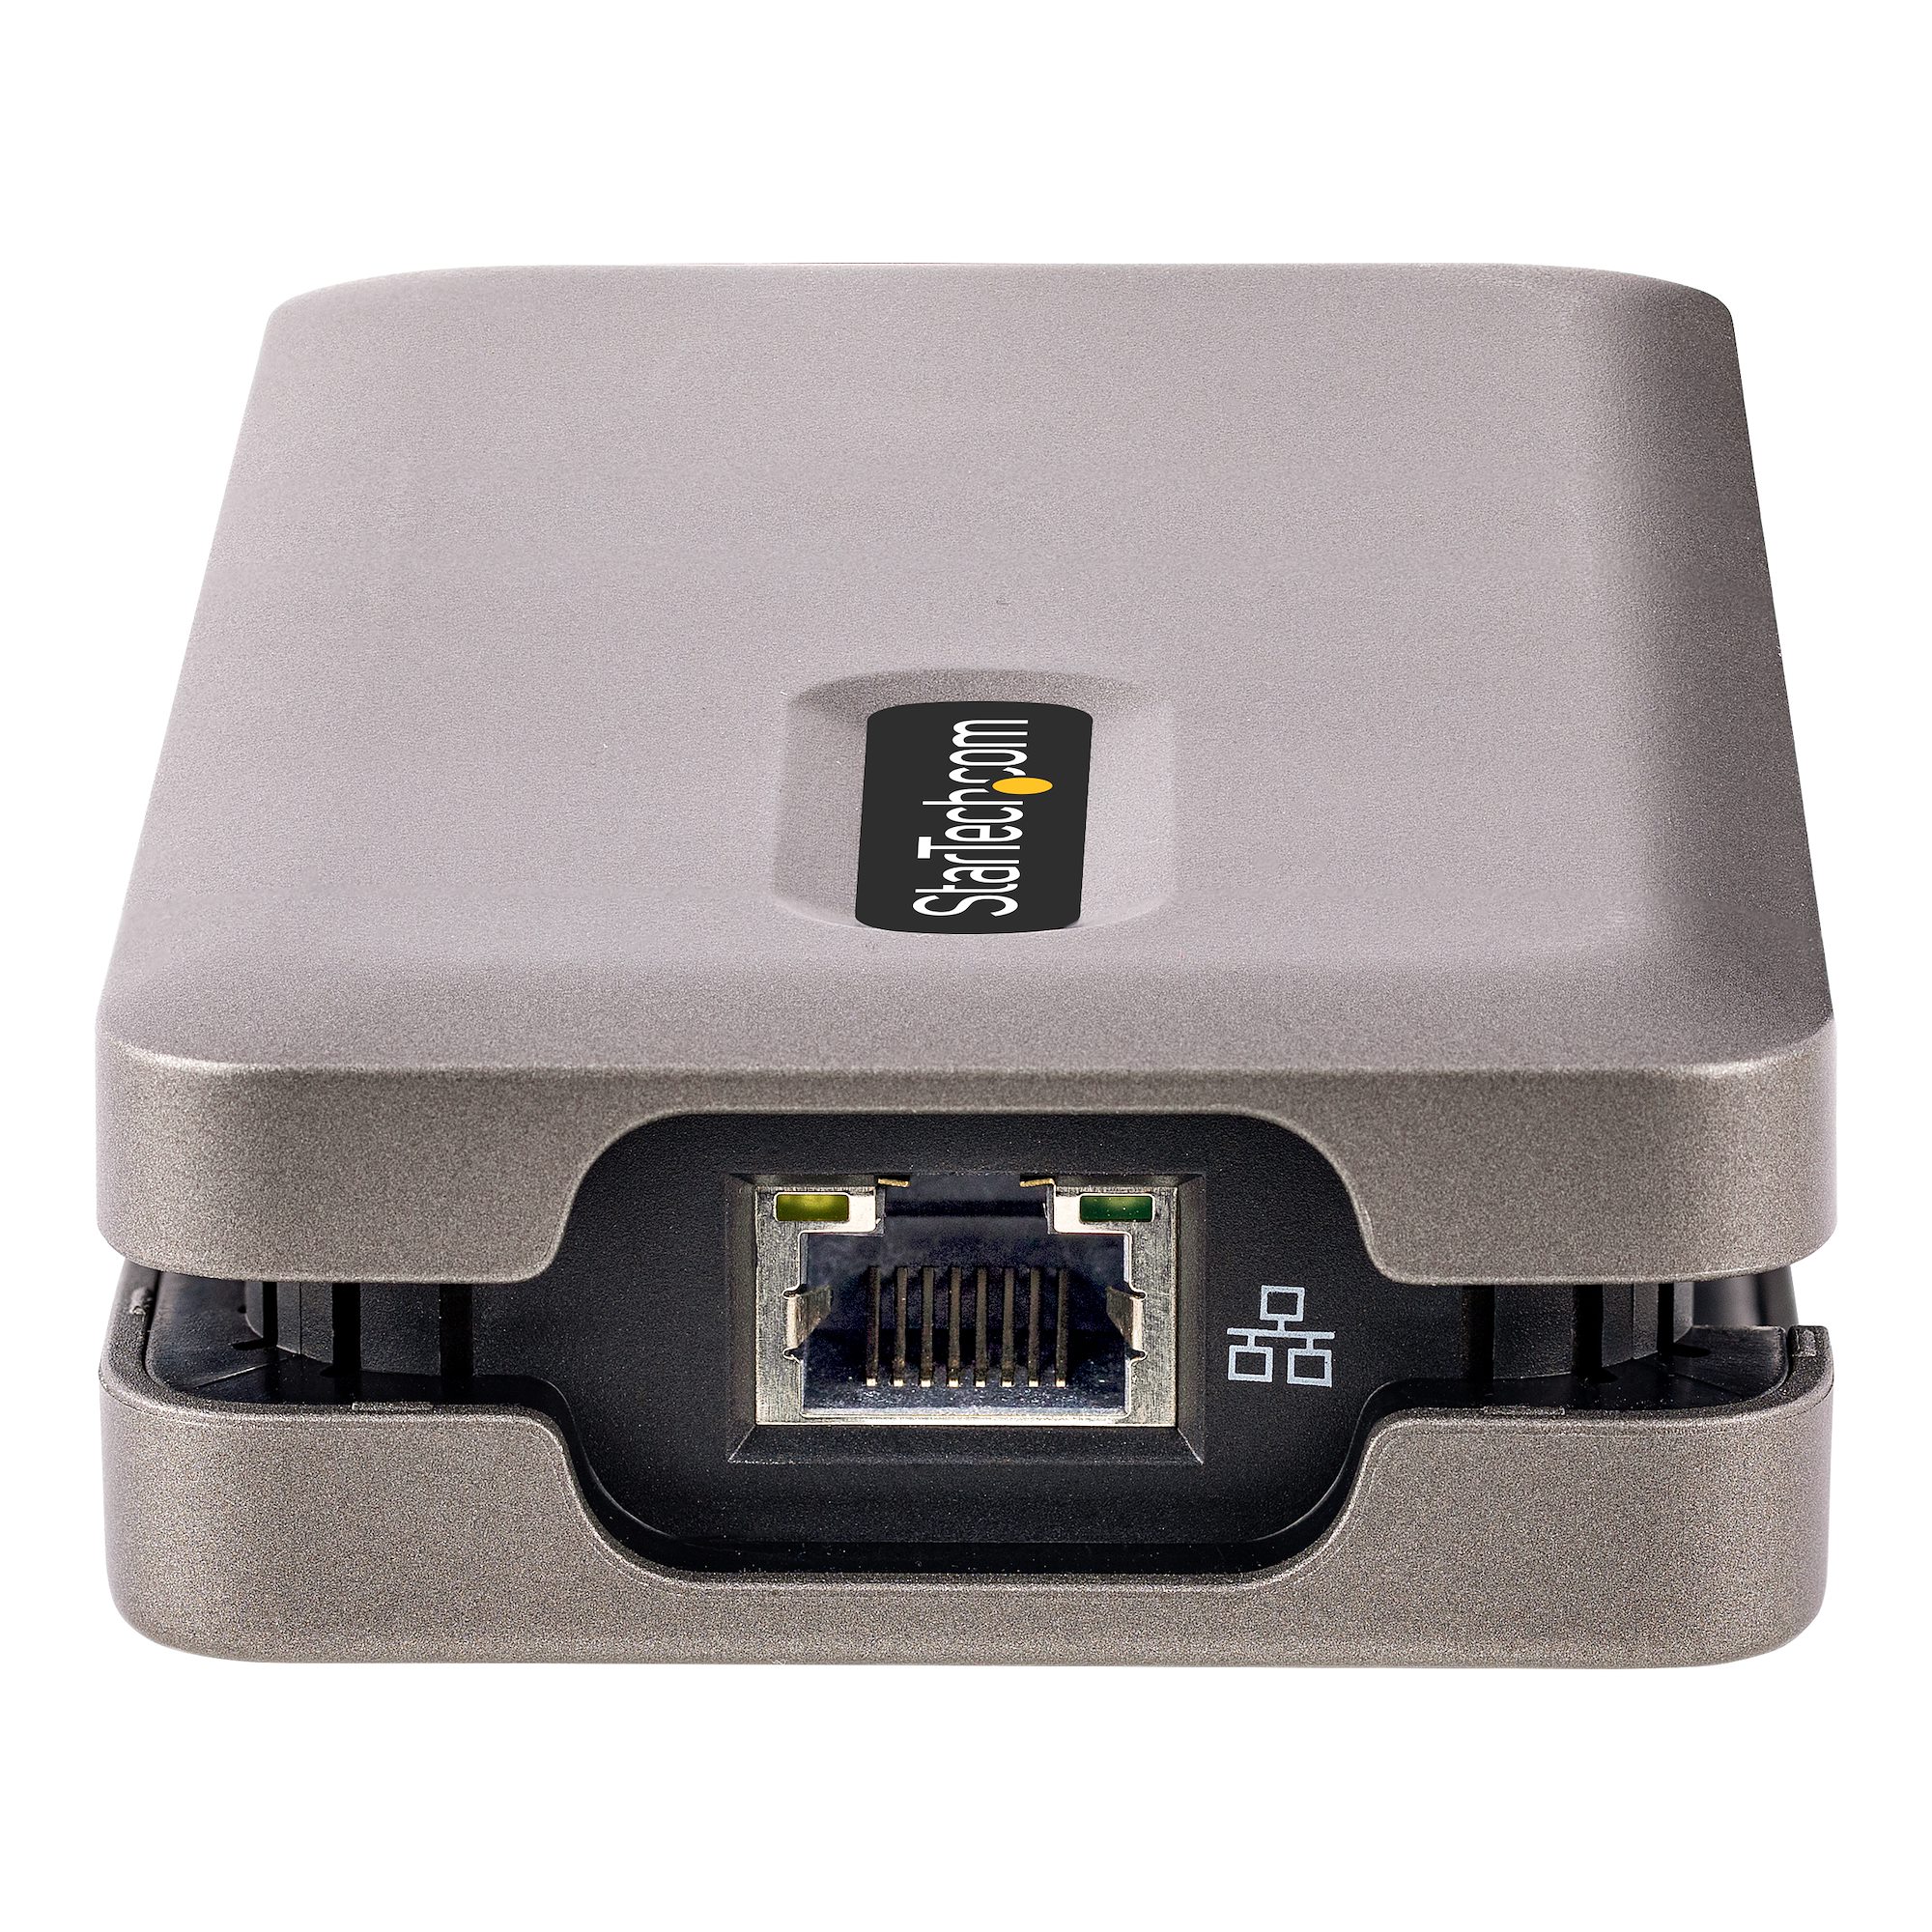 Rocstor Premium USB-C™ Multiport Adapter - HDMI® 4K, VGA, GbE, USB 3.0